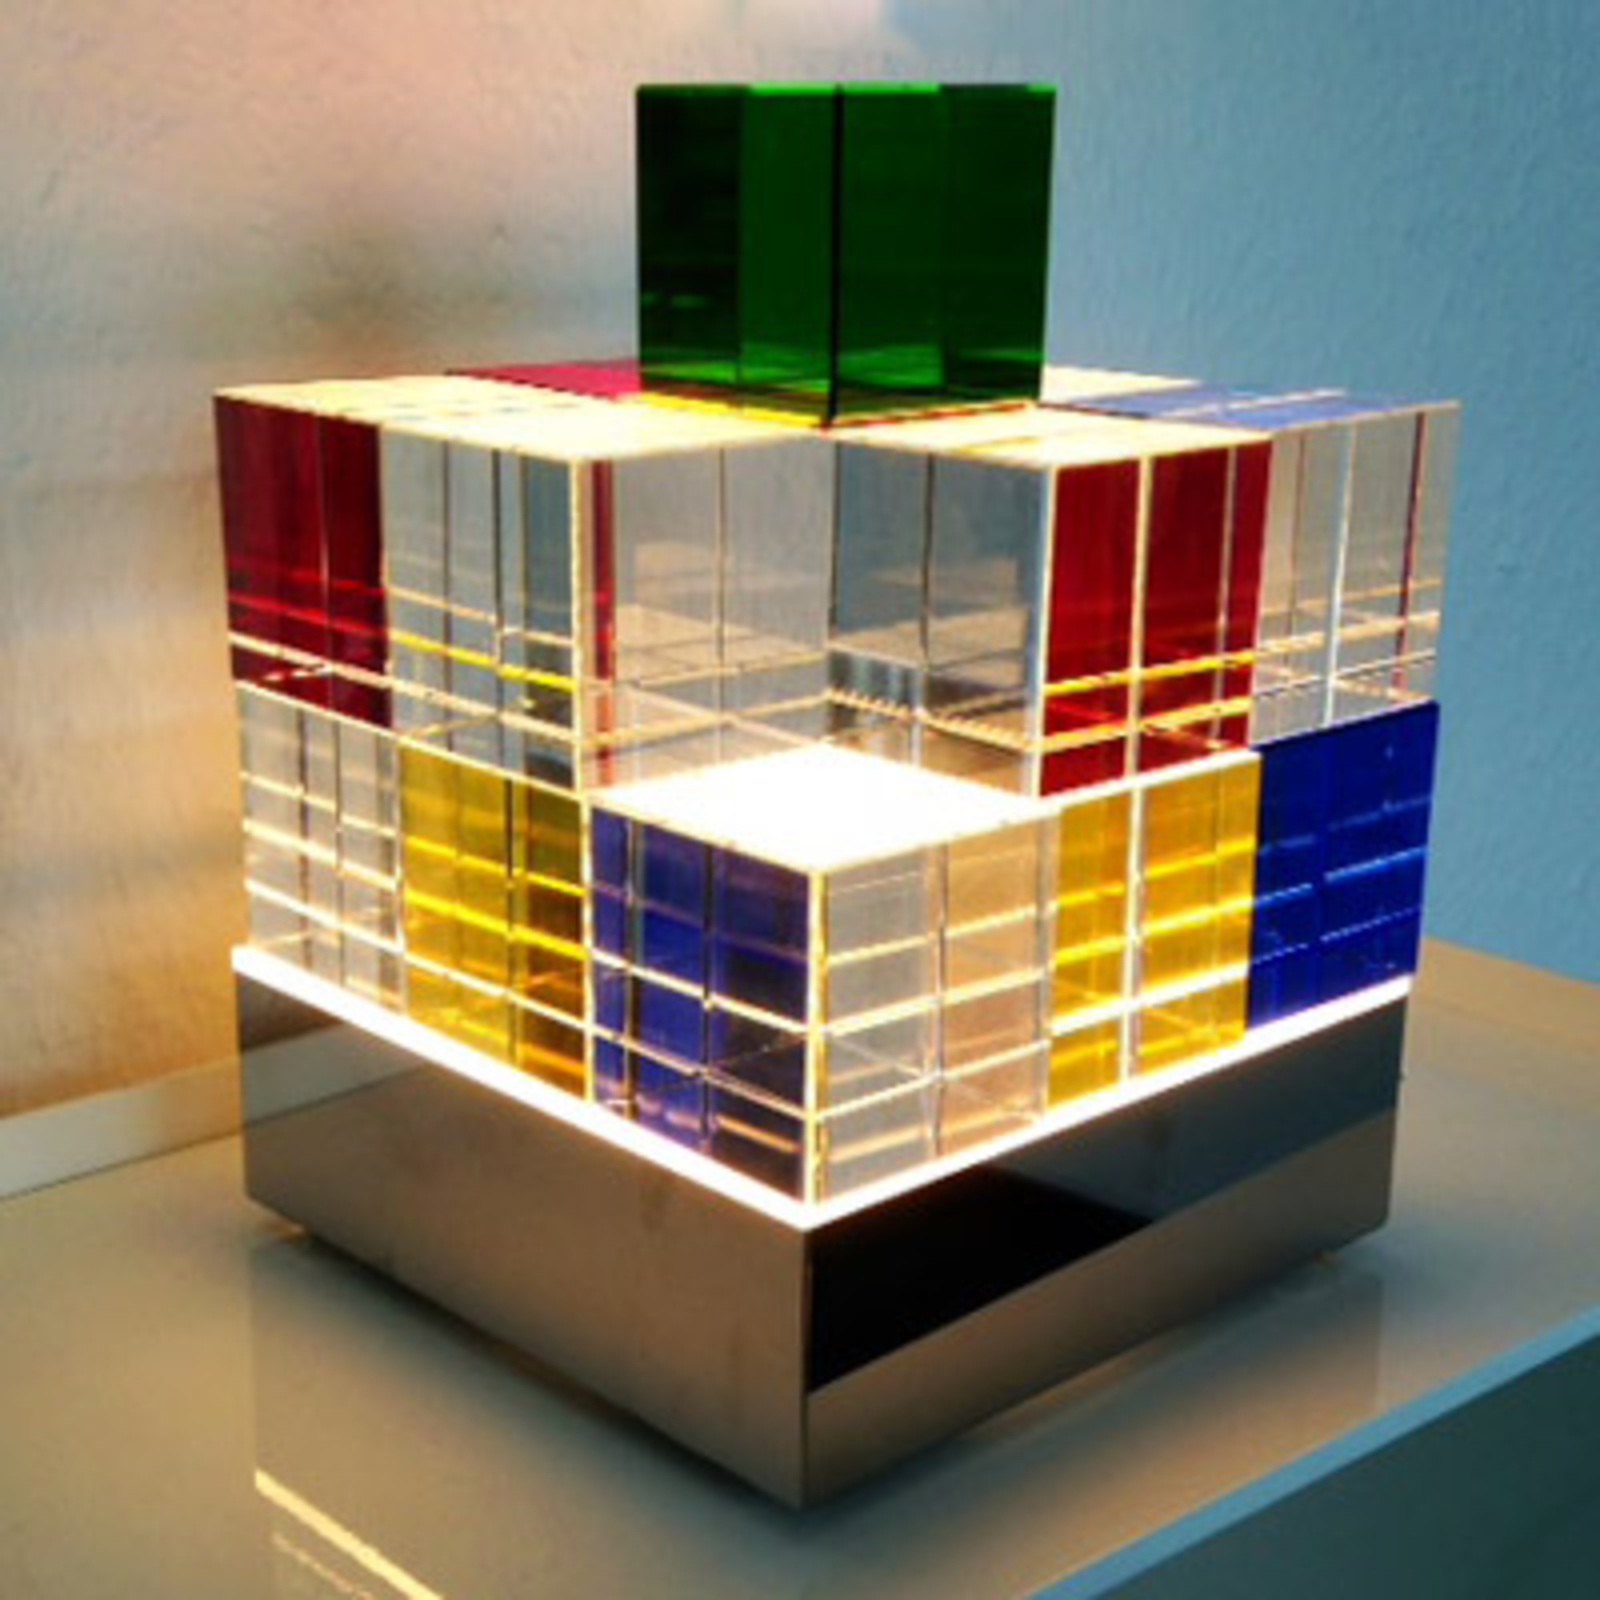 TECNOLUMEN Cubelight lampe à poser LED multicolore